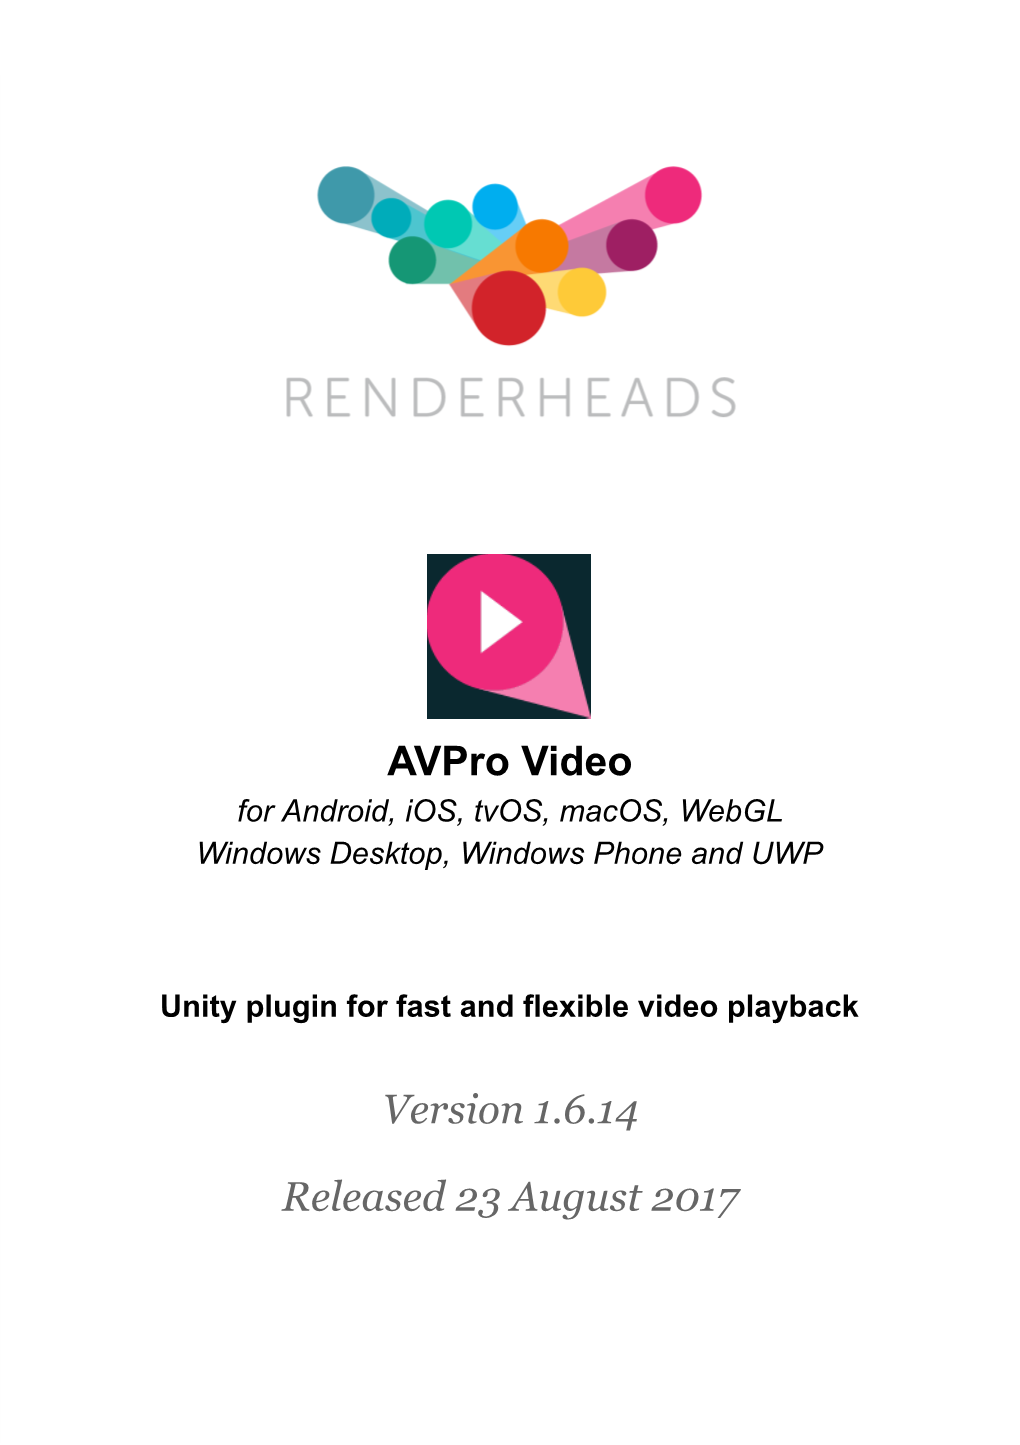 Avpro Video Version 1.6.14 Released 23 August 2017